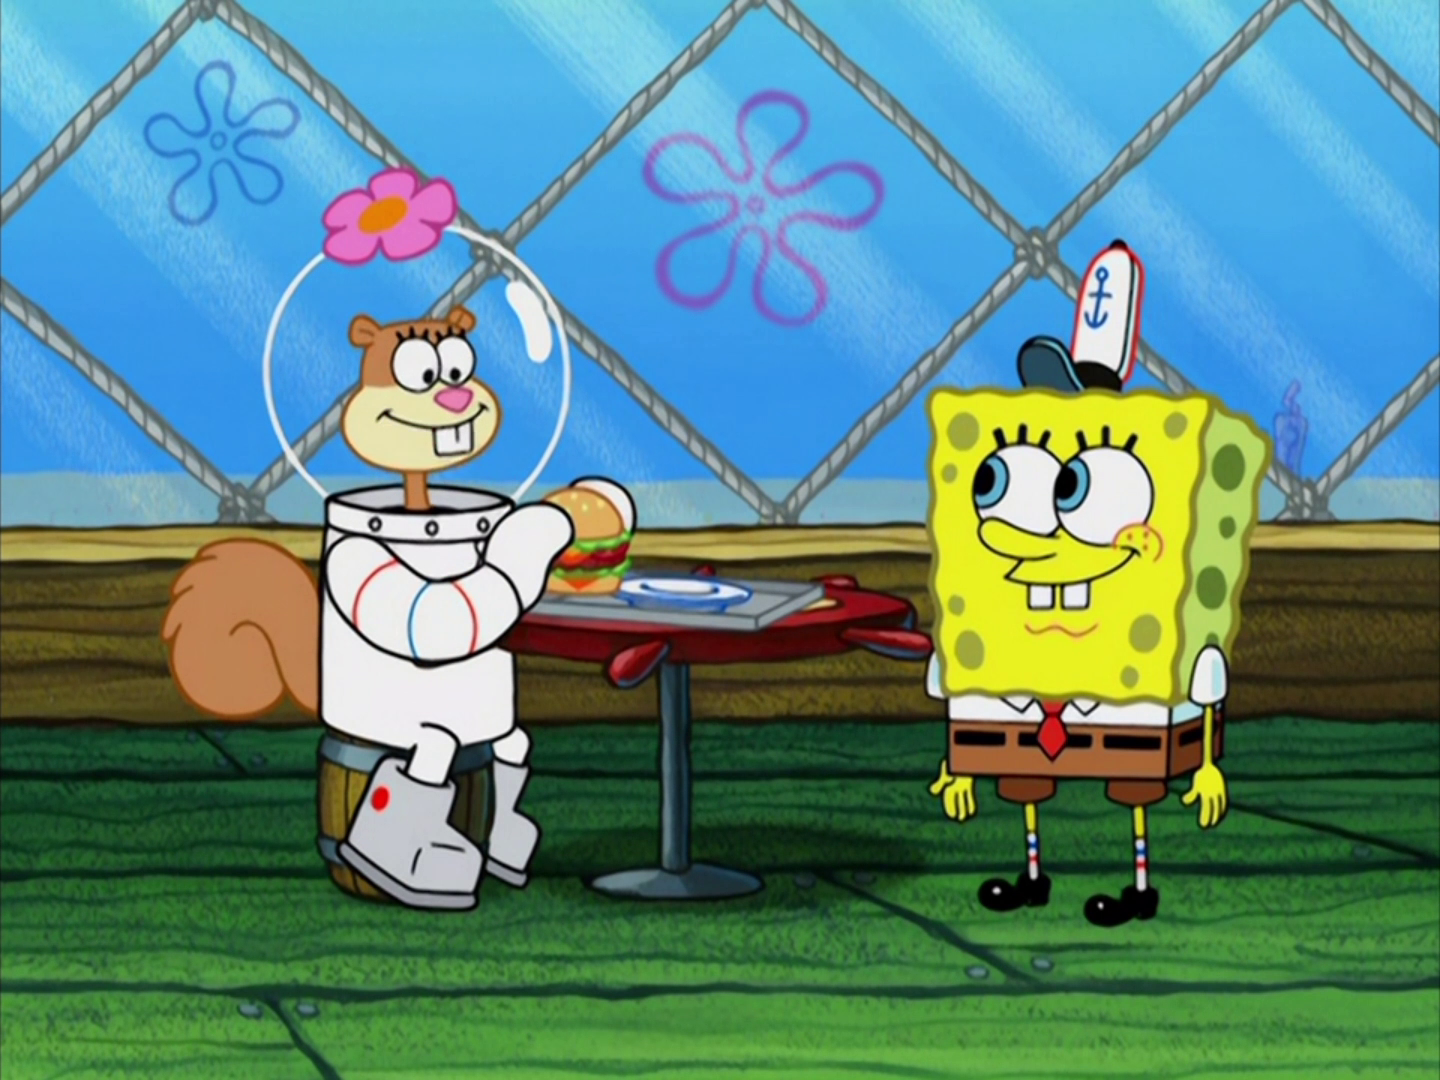 spongebob and sandy getting married